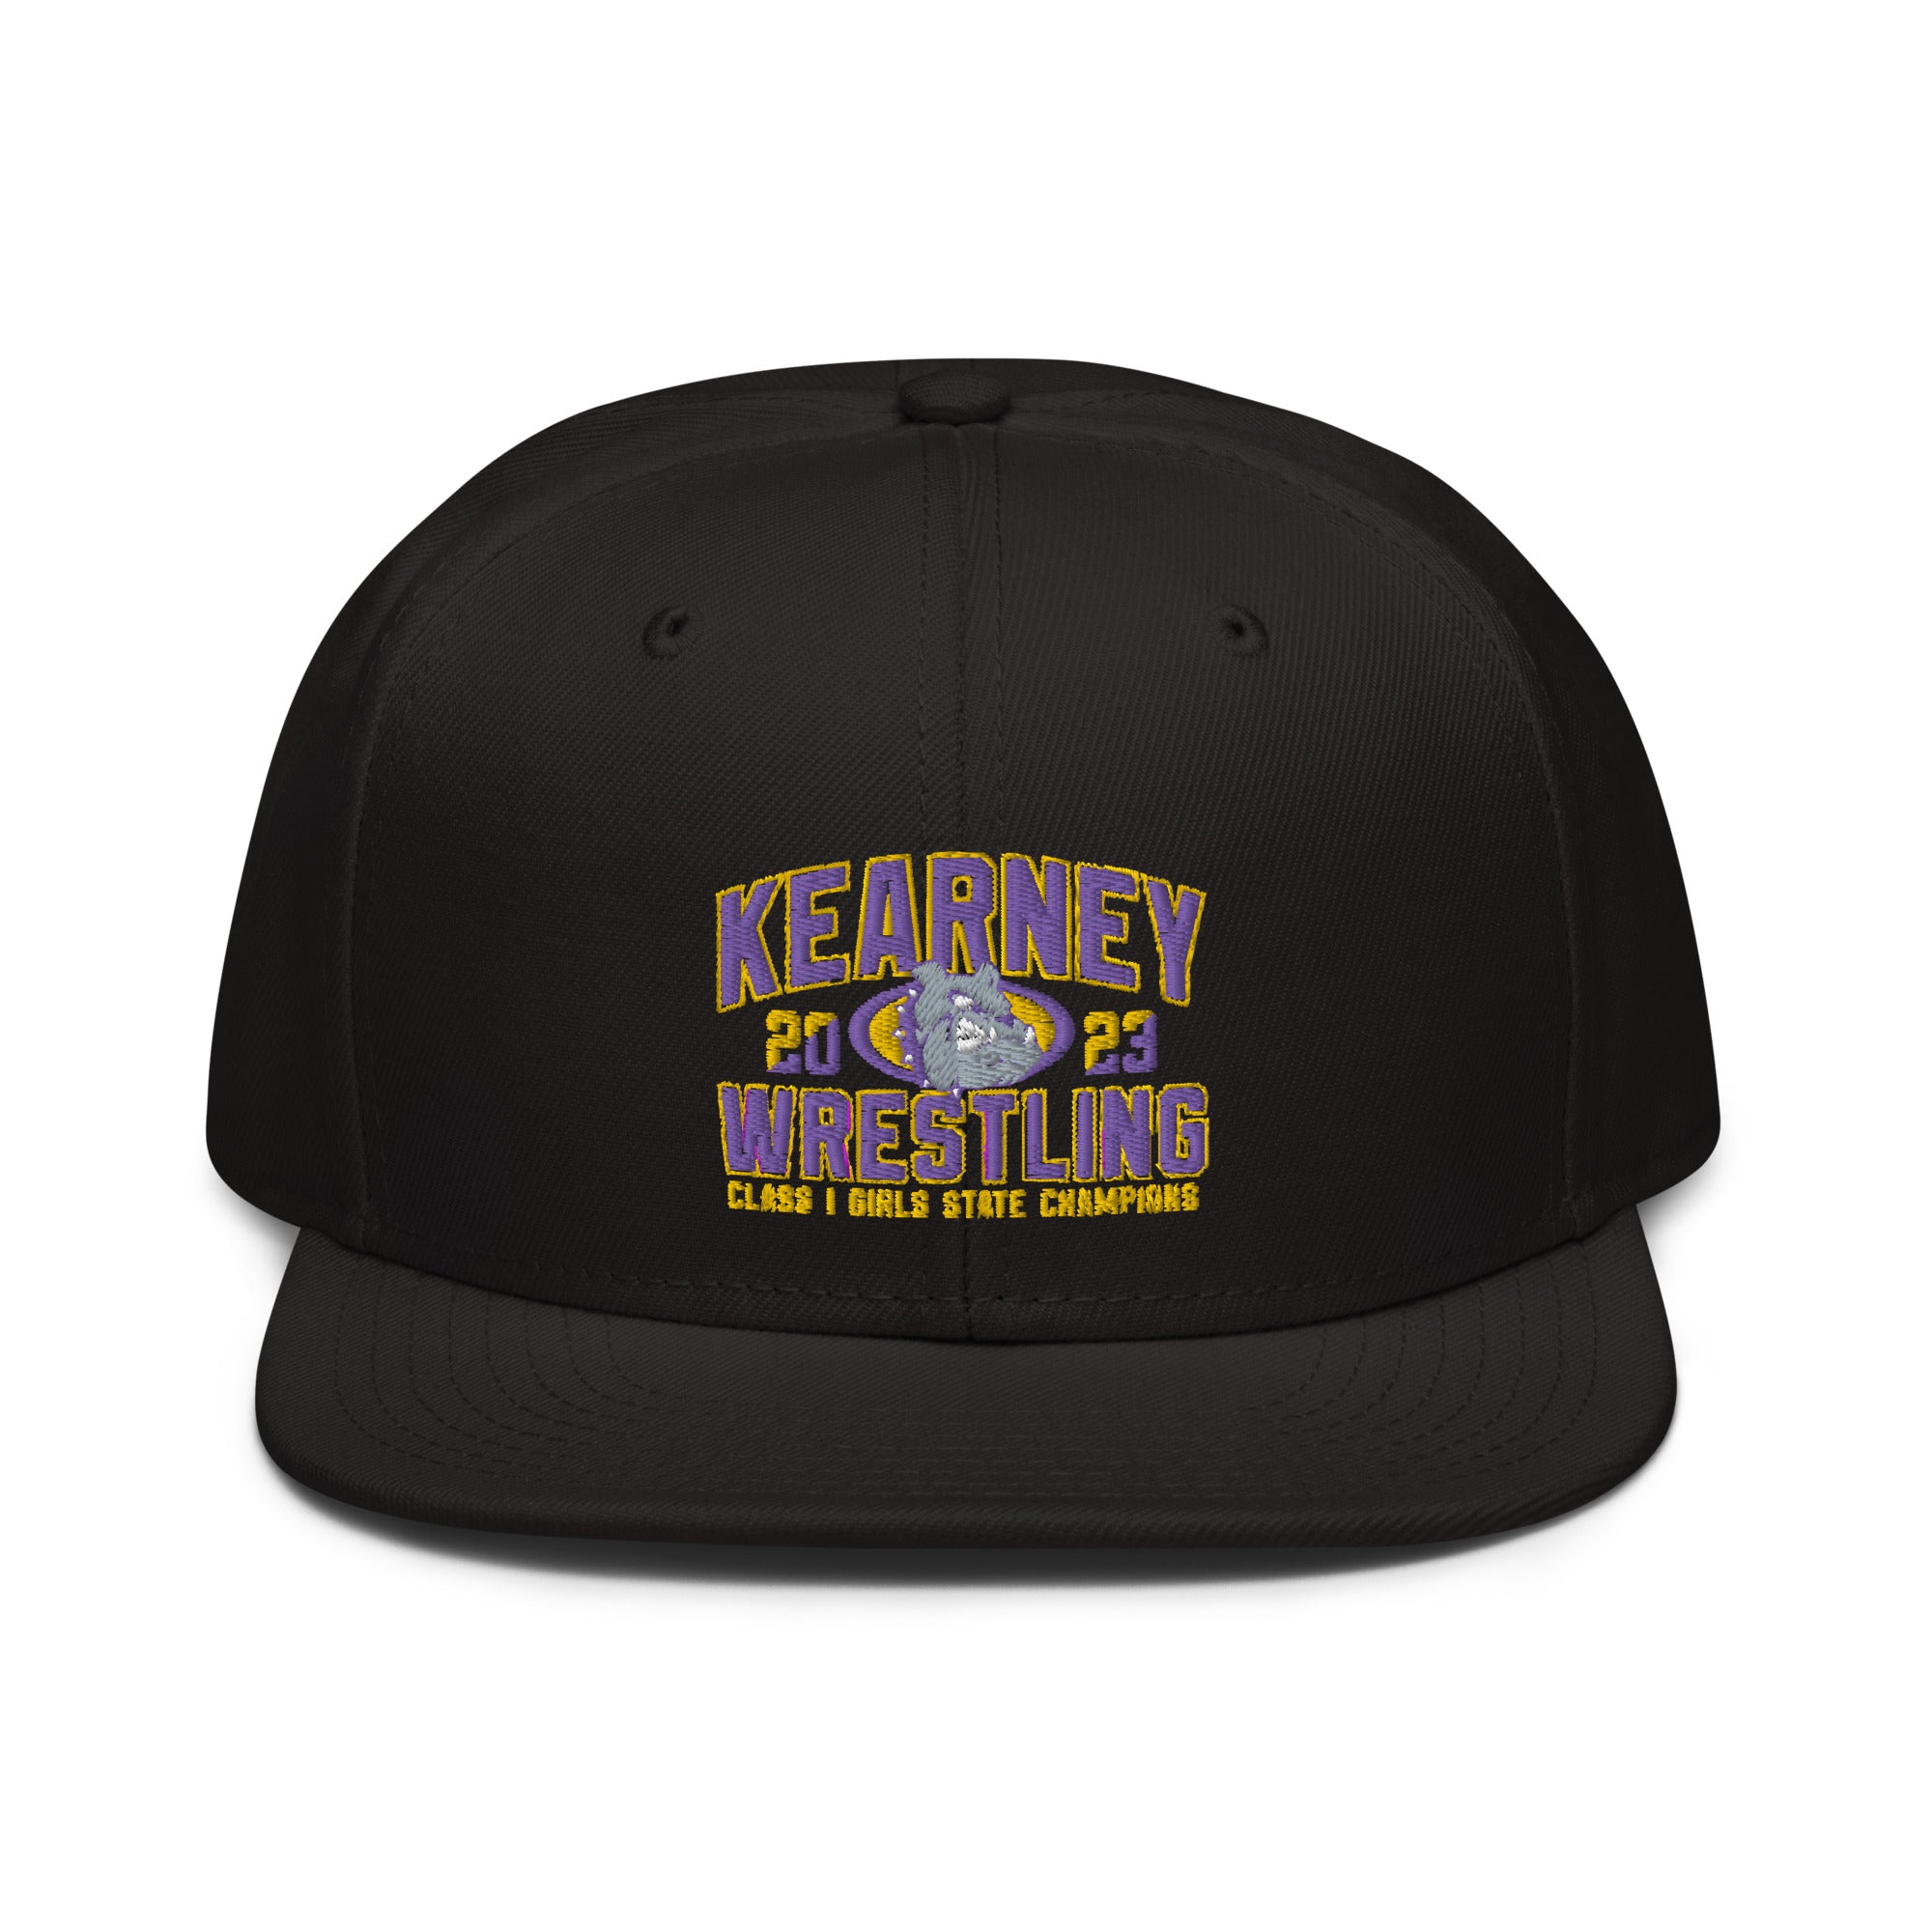 Kearney Wrestling Girls State Champs Snapback Hat